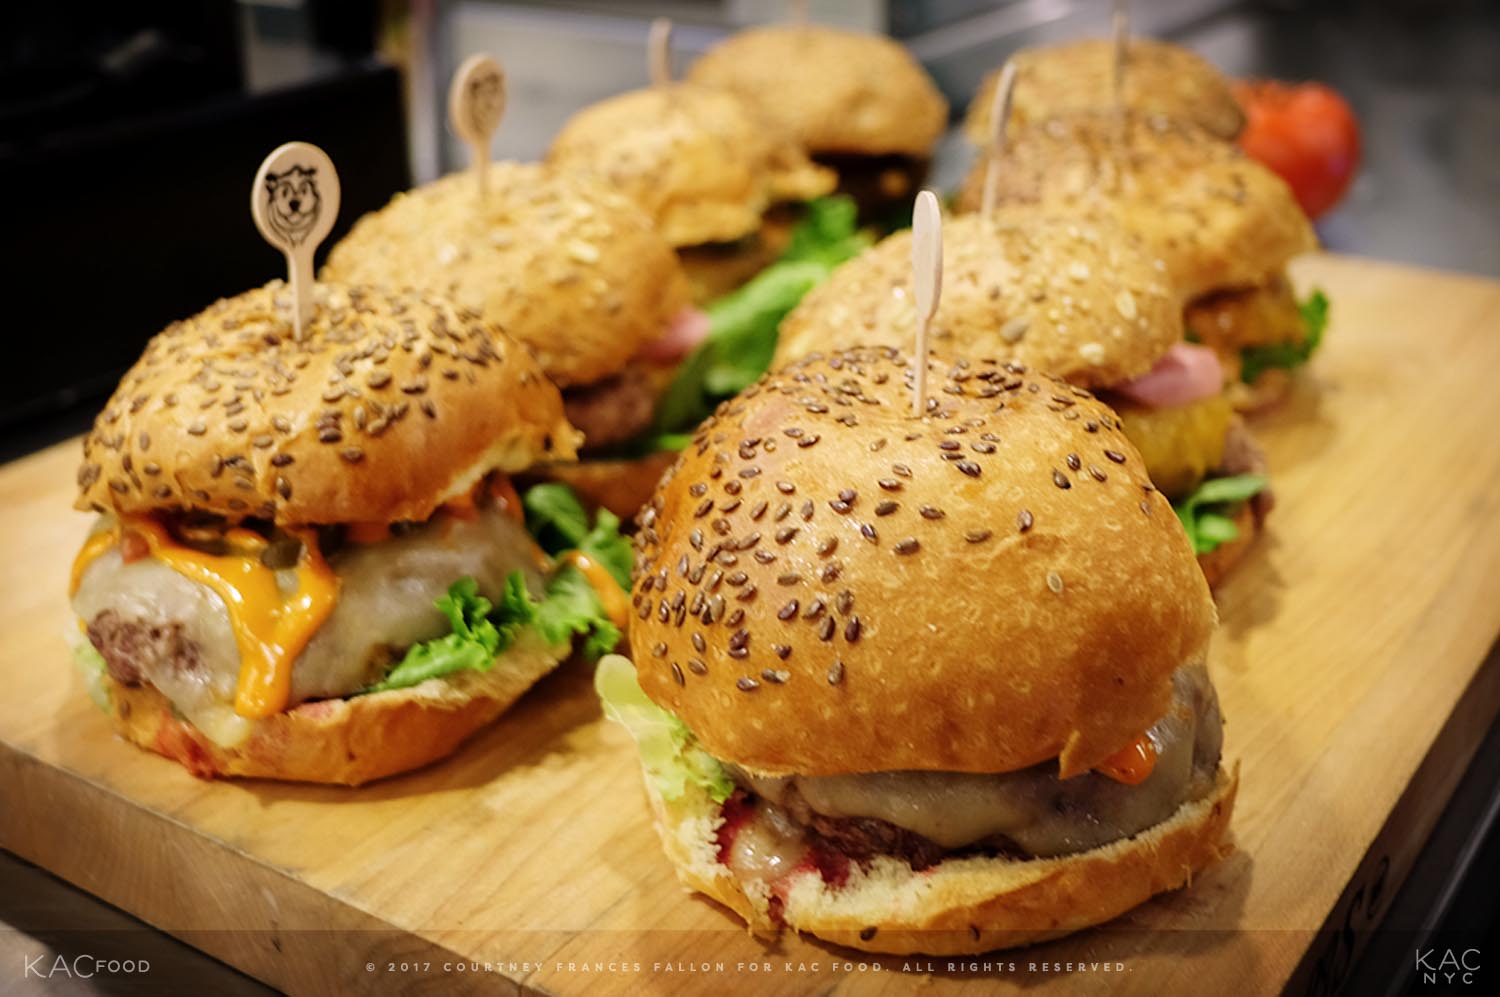 kac_food-170409-cff-yankee-bareburger-socal-turkey-burgers-1-1500.jpg